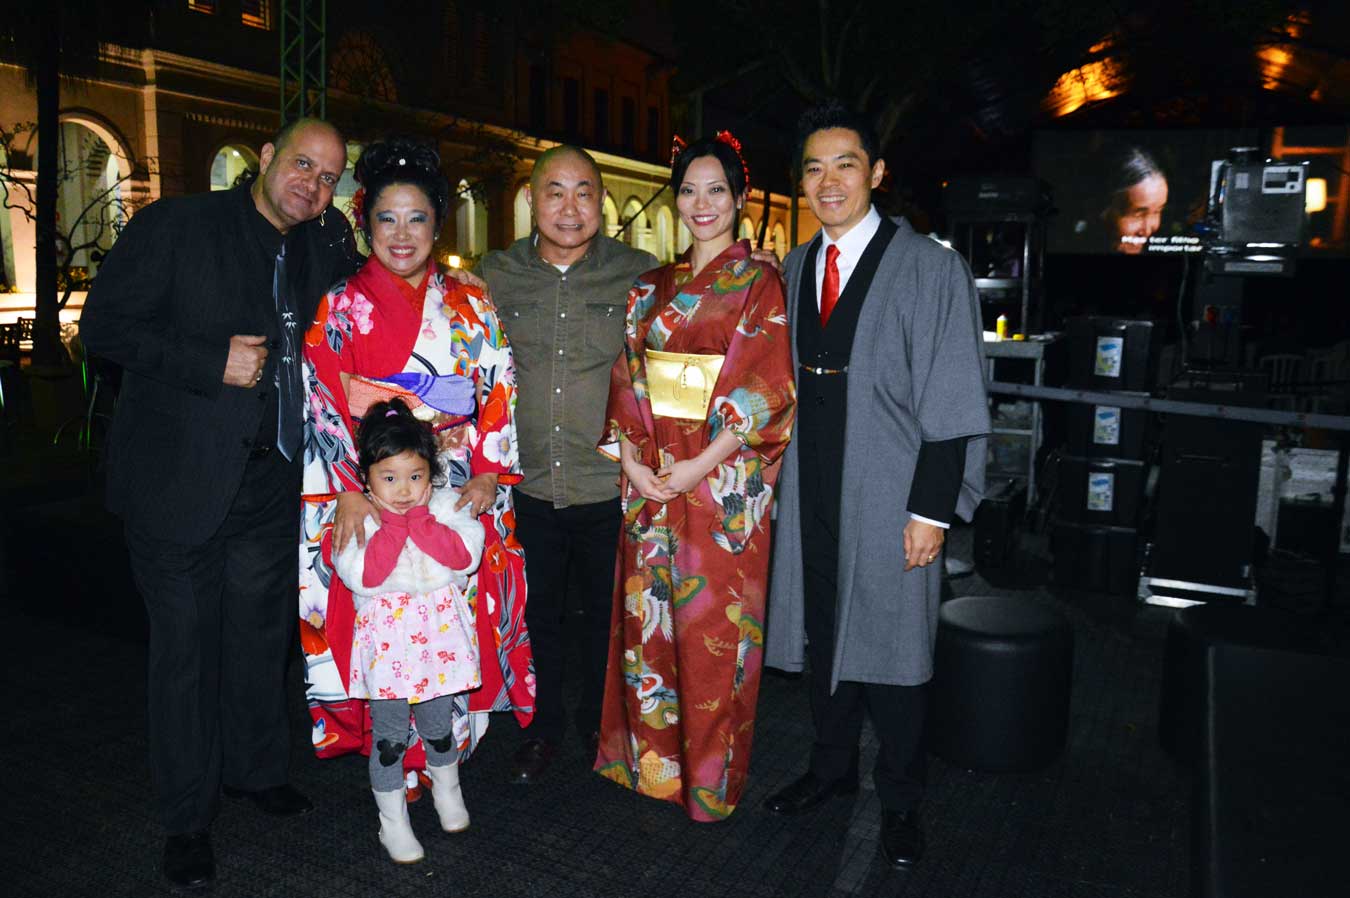 Músico Derico, Cantora Karen Ito, Takao Sato (Promotor de eventos), Apresentadores Kendi Yamai e Gurê. (Foto: Luci Judice Yizima)